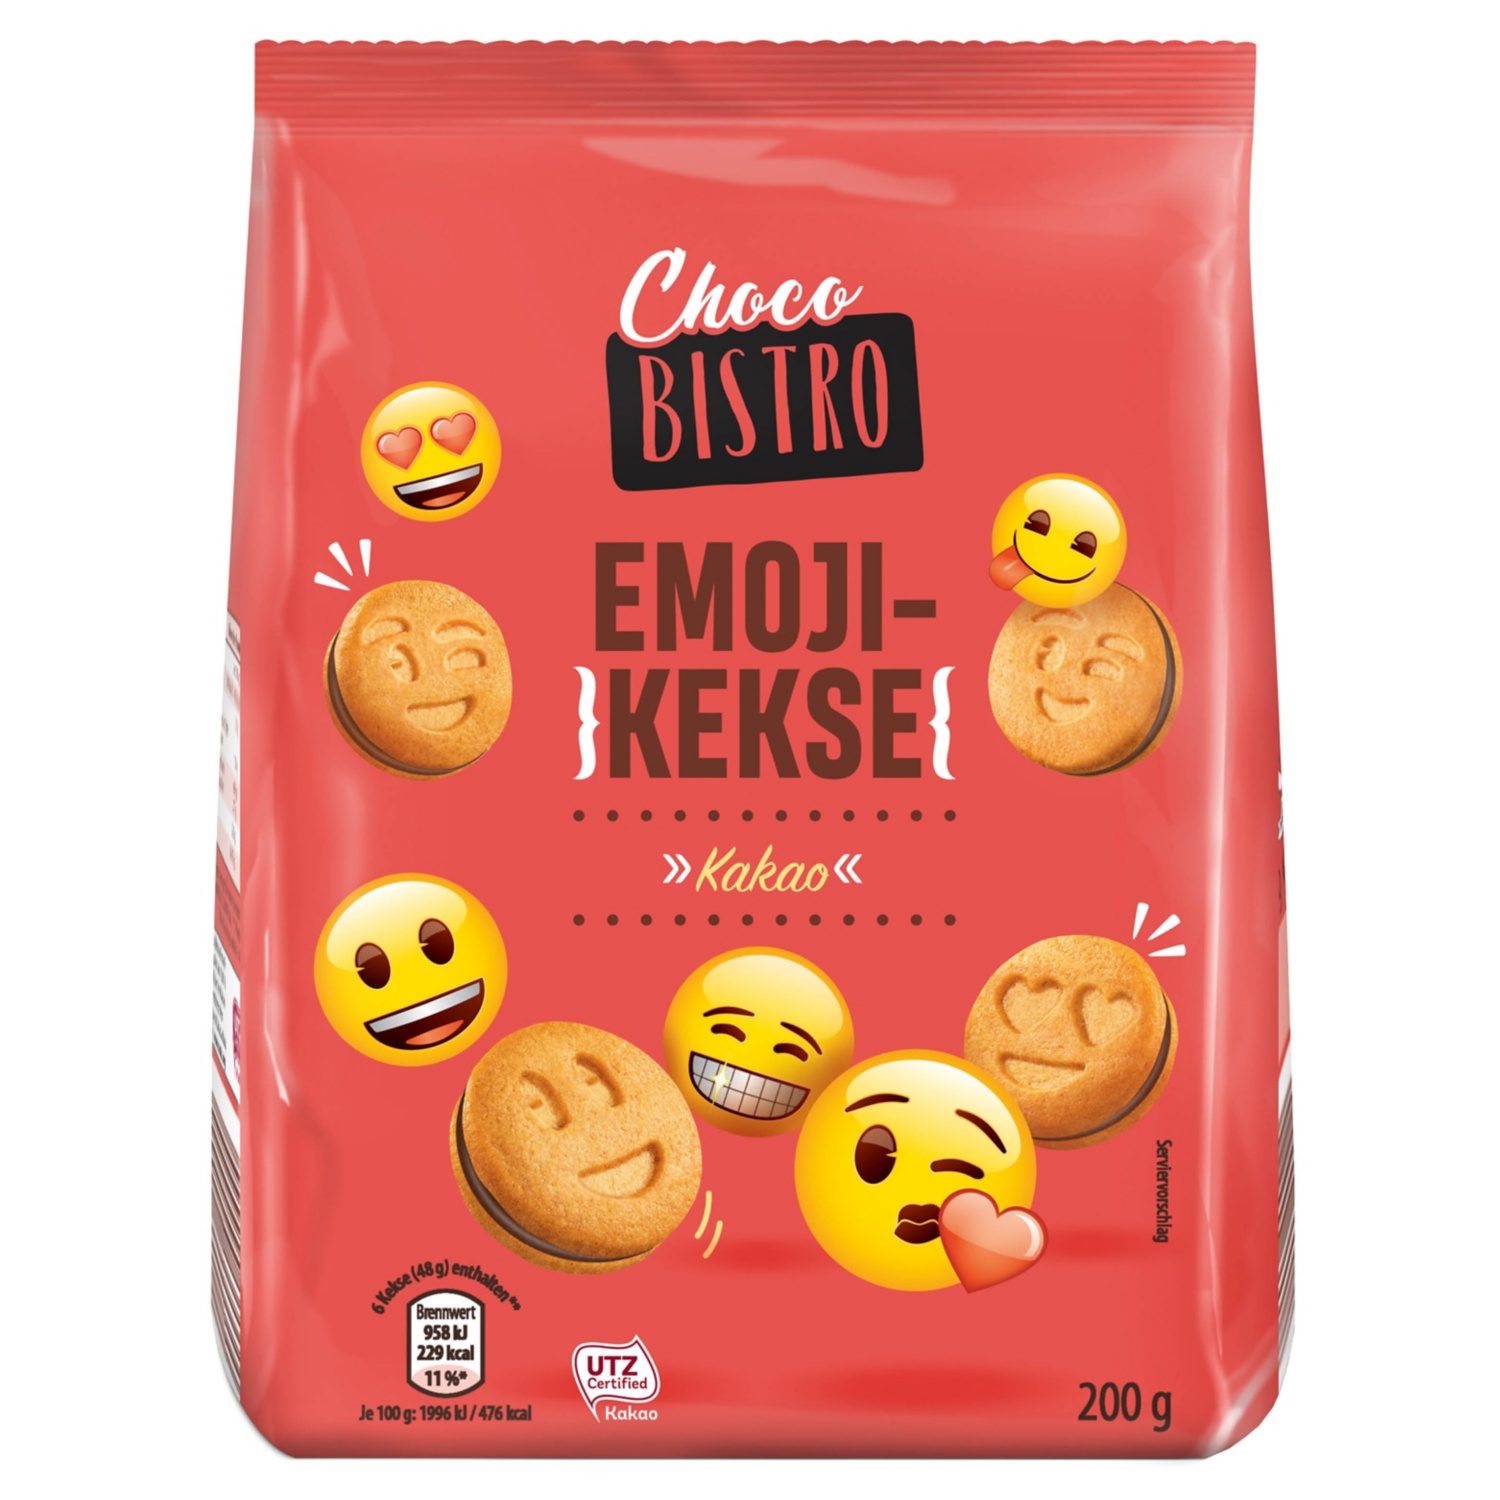 Choco BISTRO Emoji-Kekse 200 g